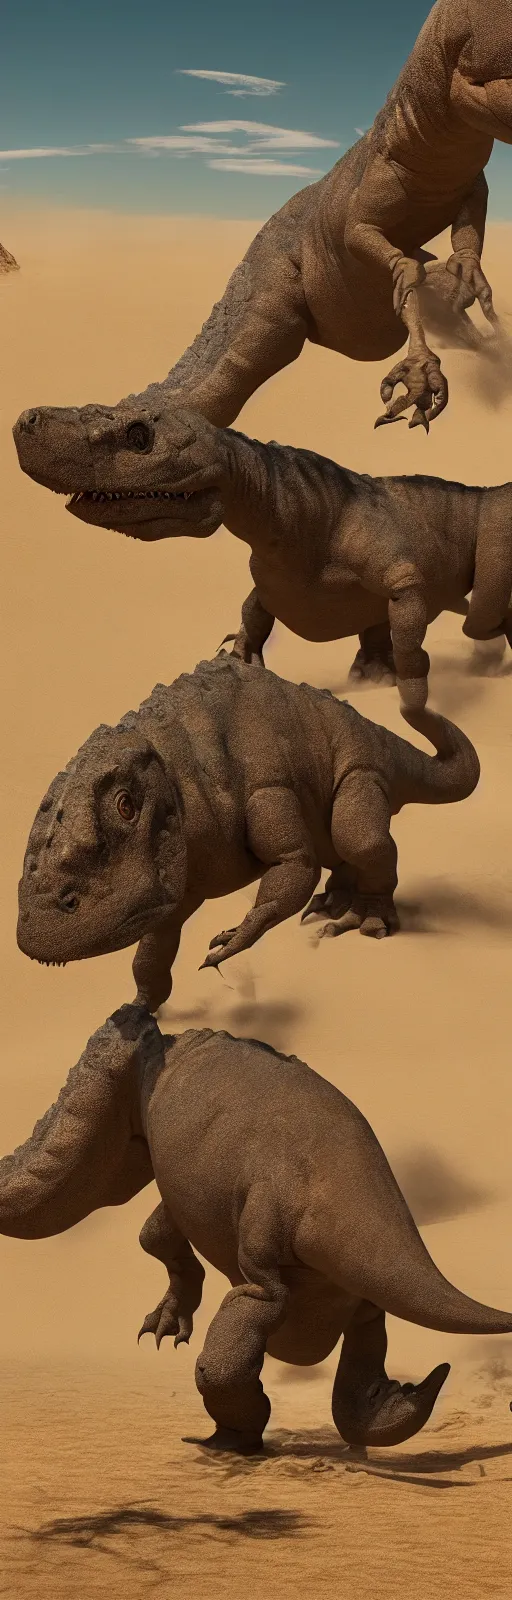 Prompt: big dinosaur vacuuming sand in a desert, 4k,